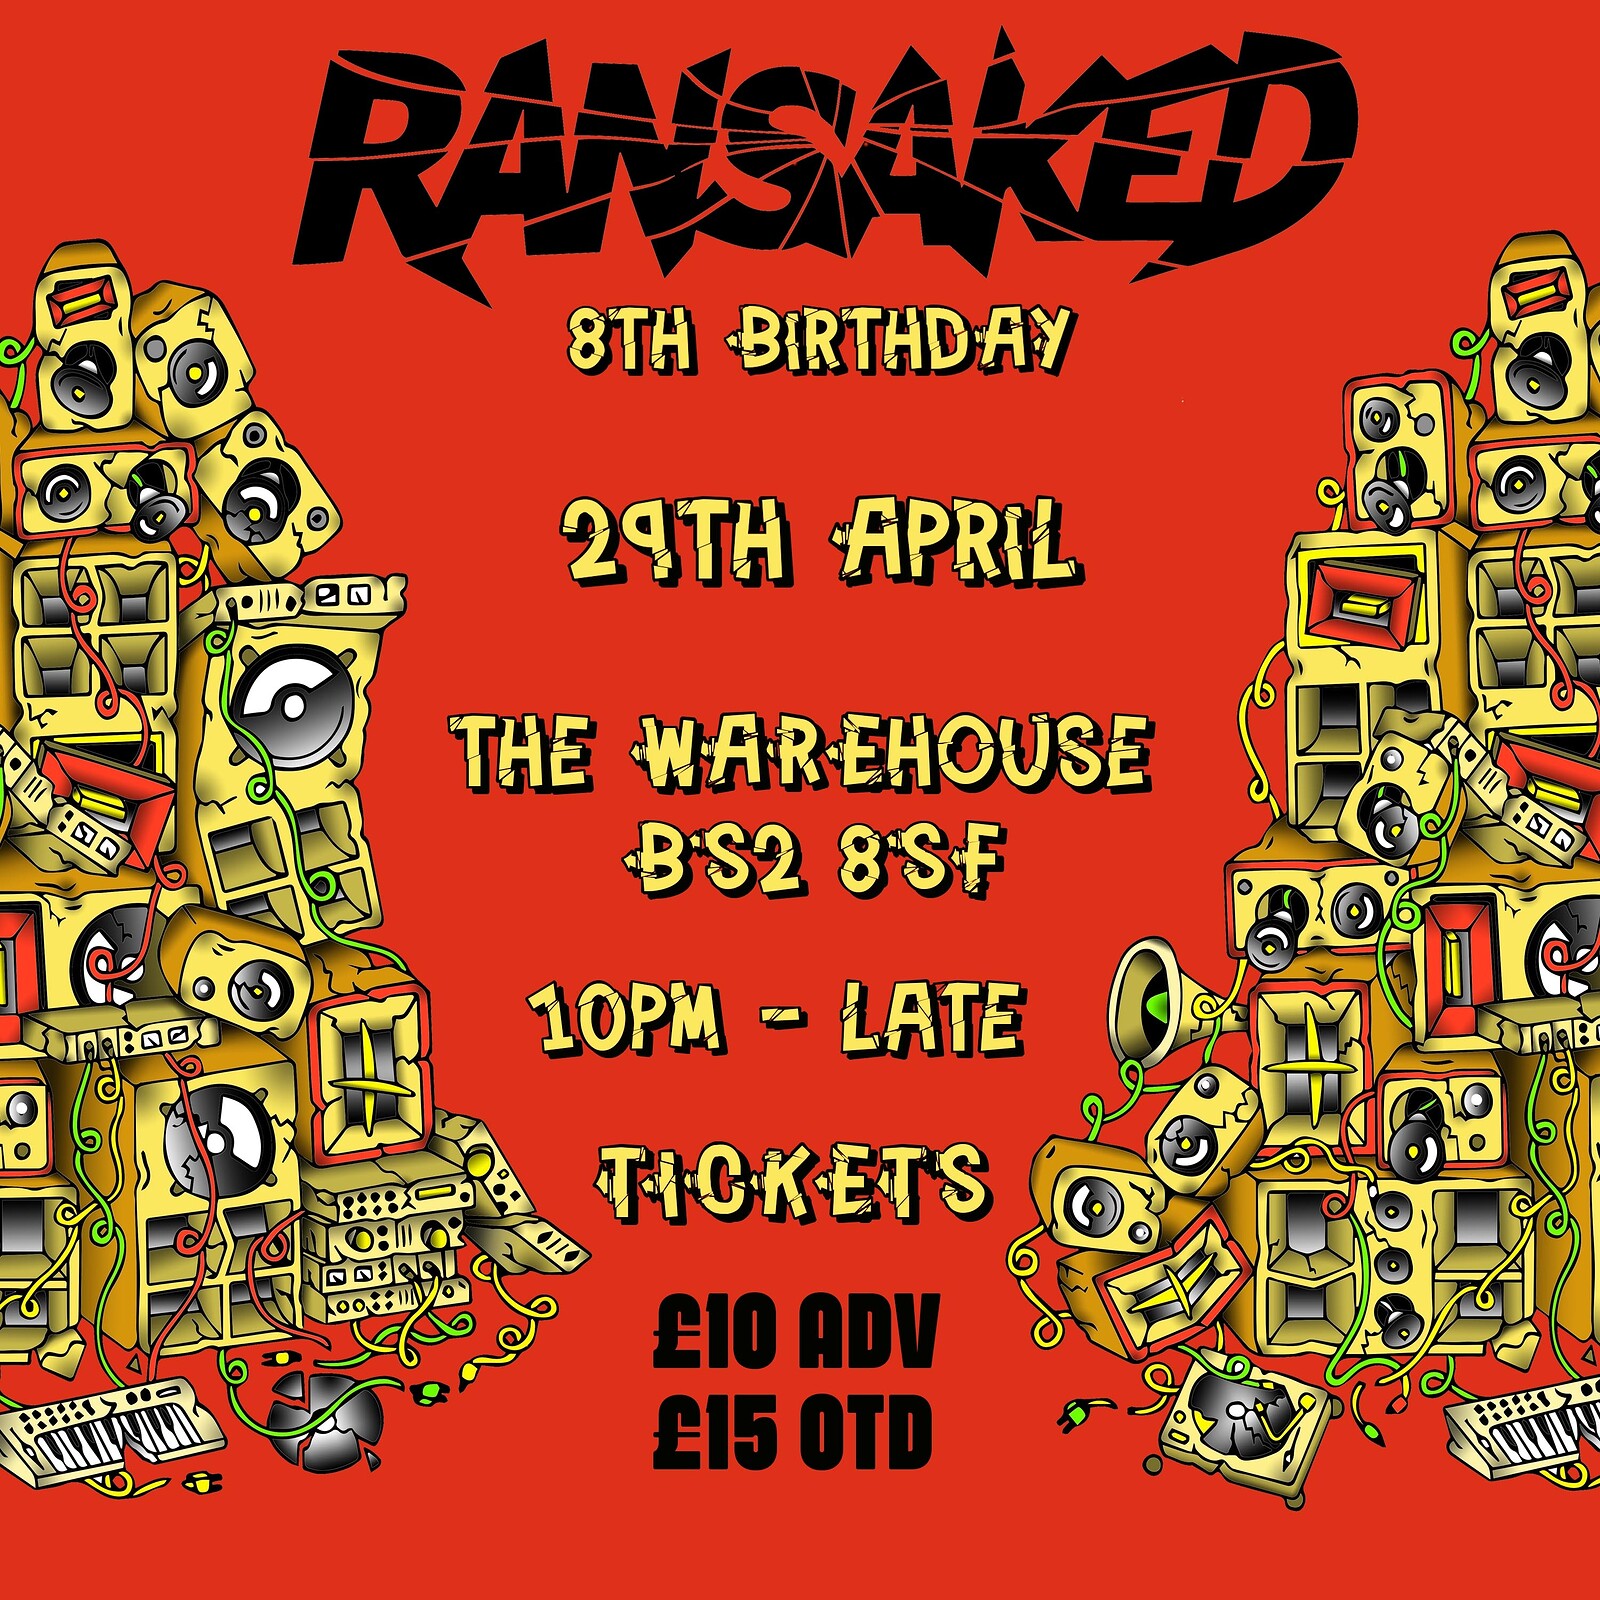 Ransaked 8th Birthday at The Warehouse